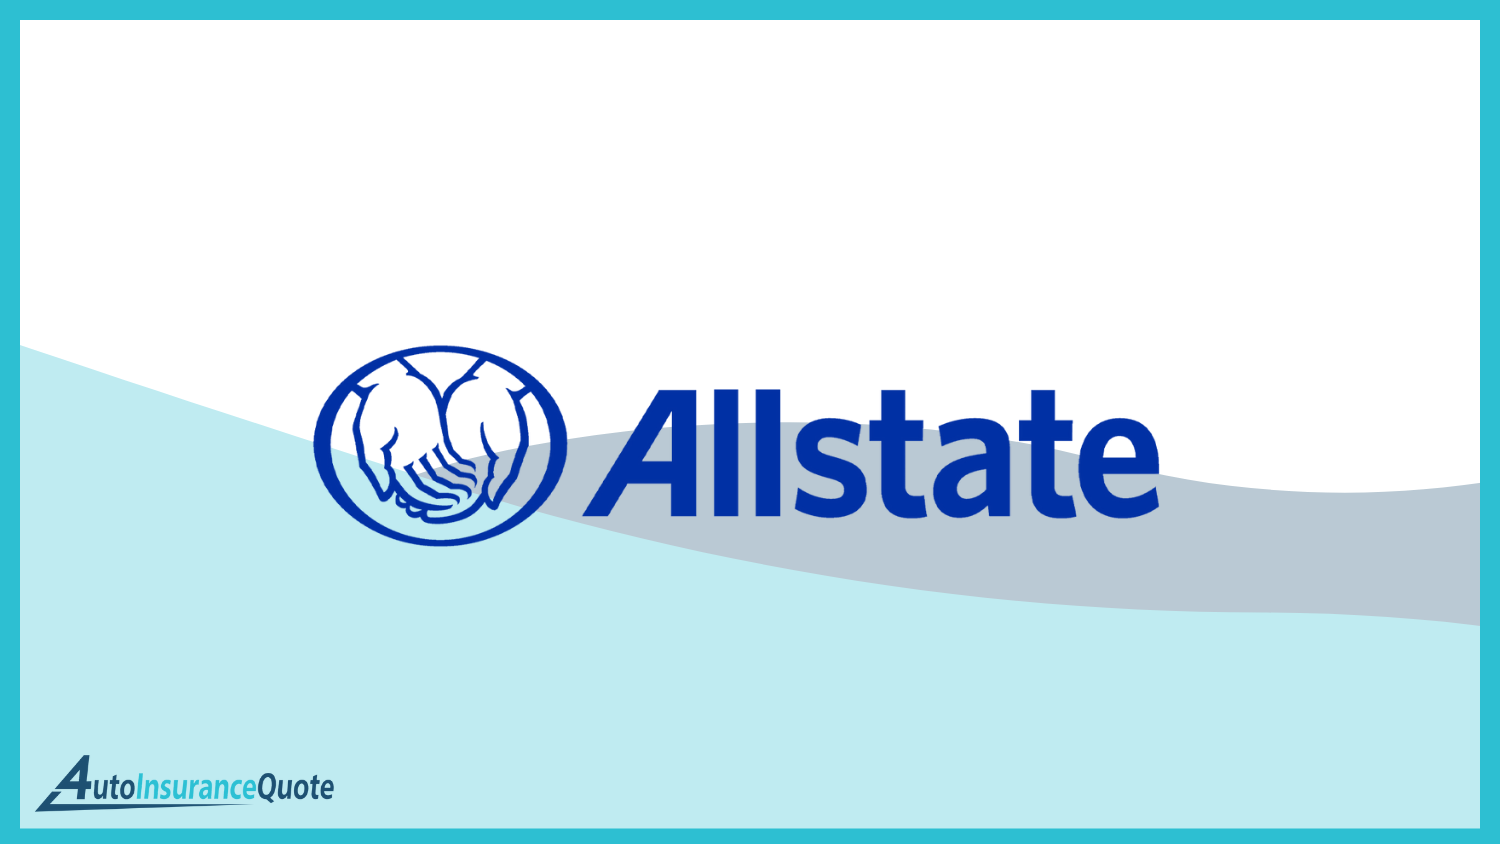 Allstate: Best Auto Insurance for Disabled Veterans